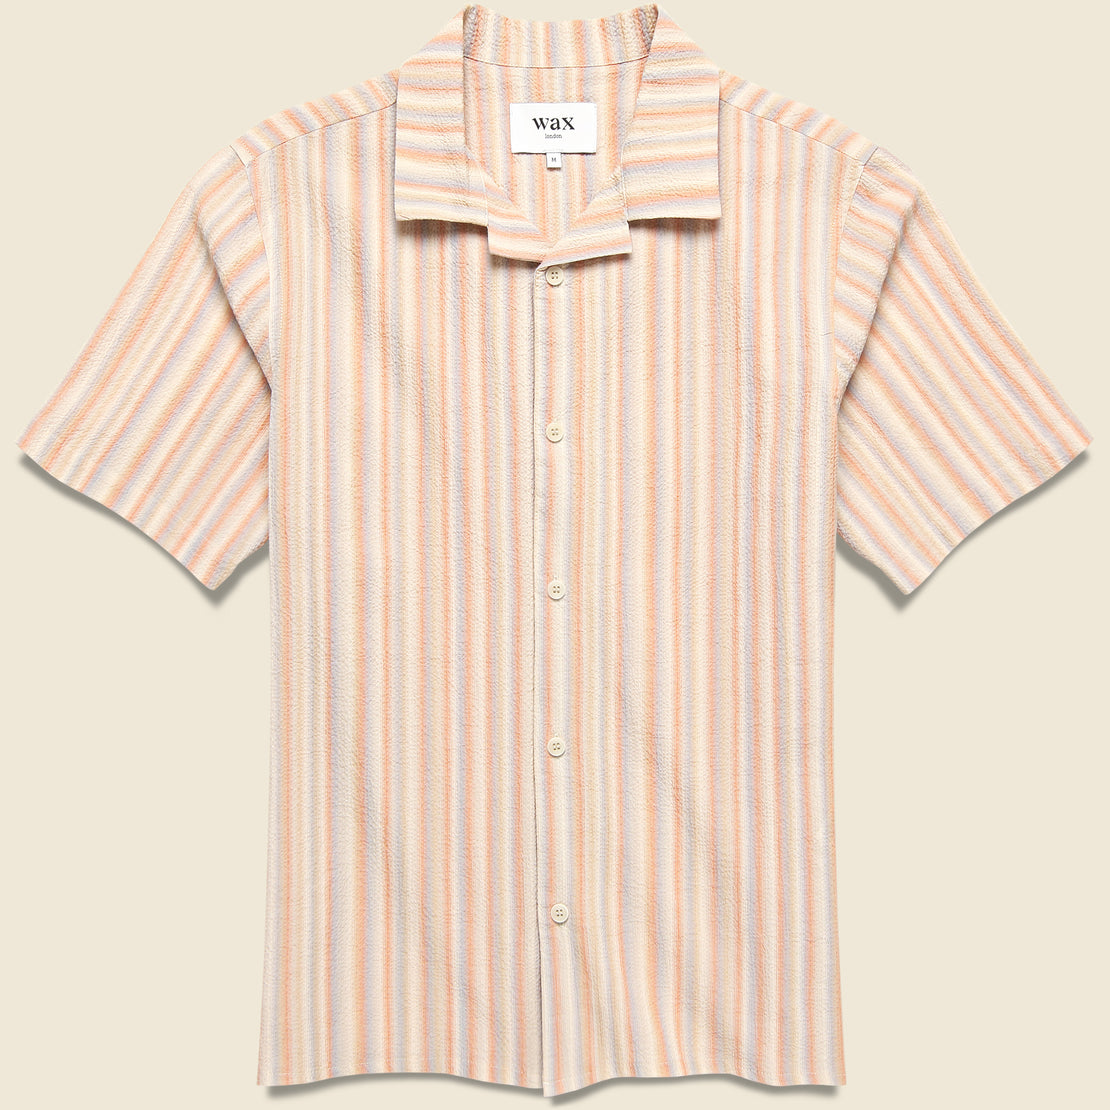 Wax London Didcot Pastel Stripe Shirt - Pastel Pink/White